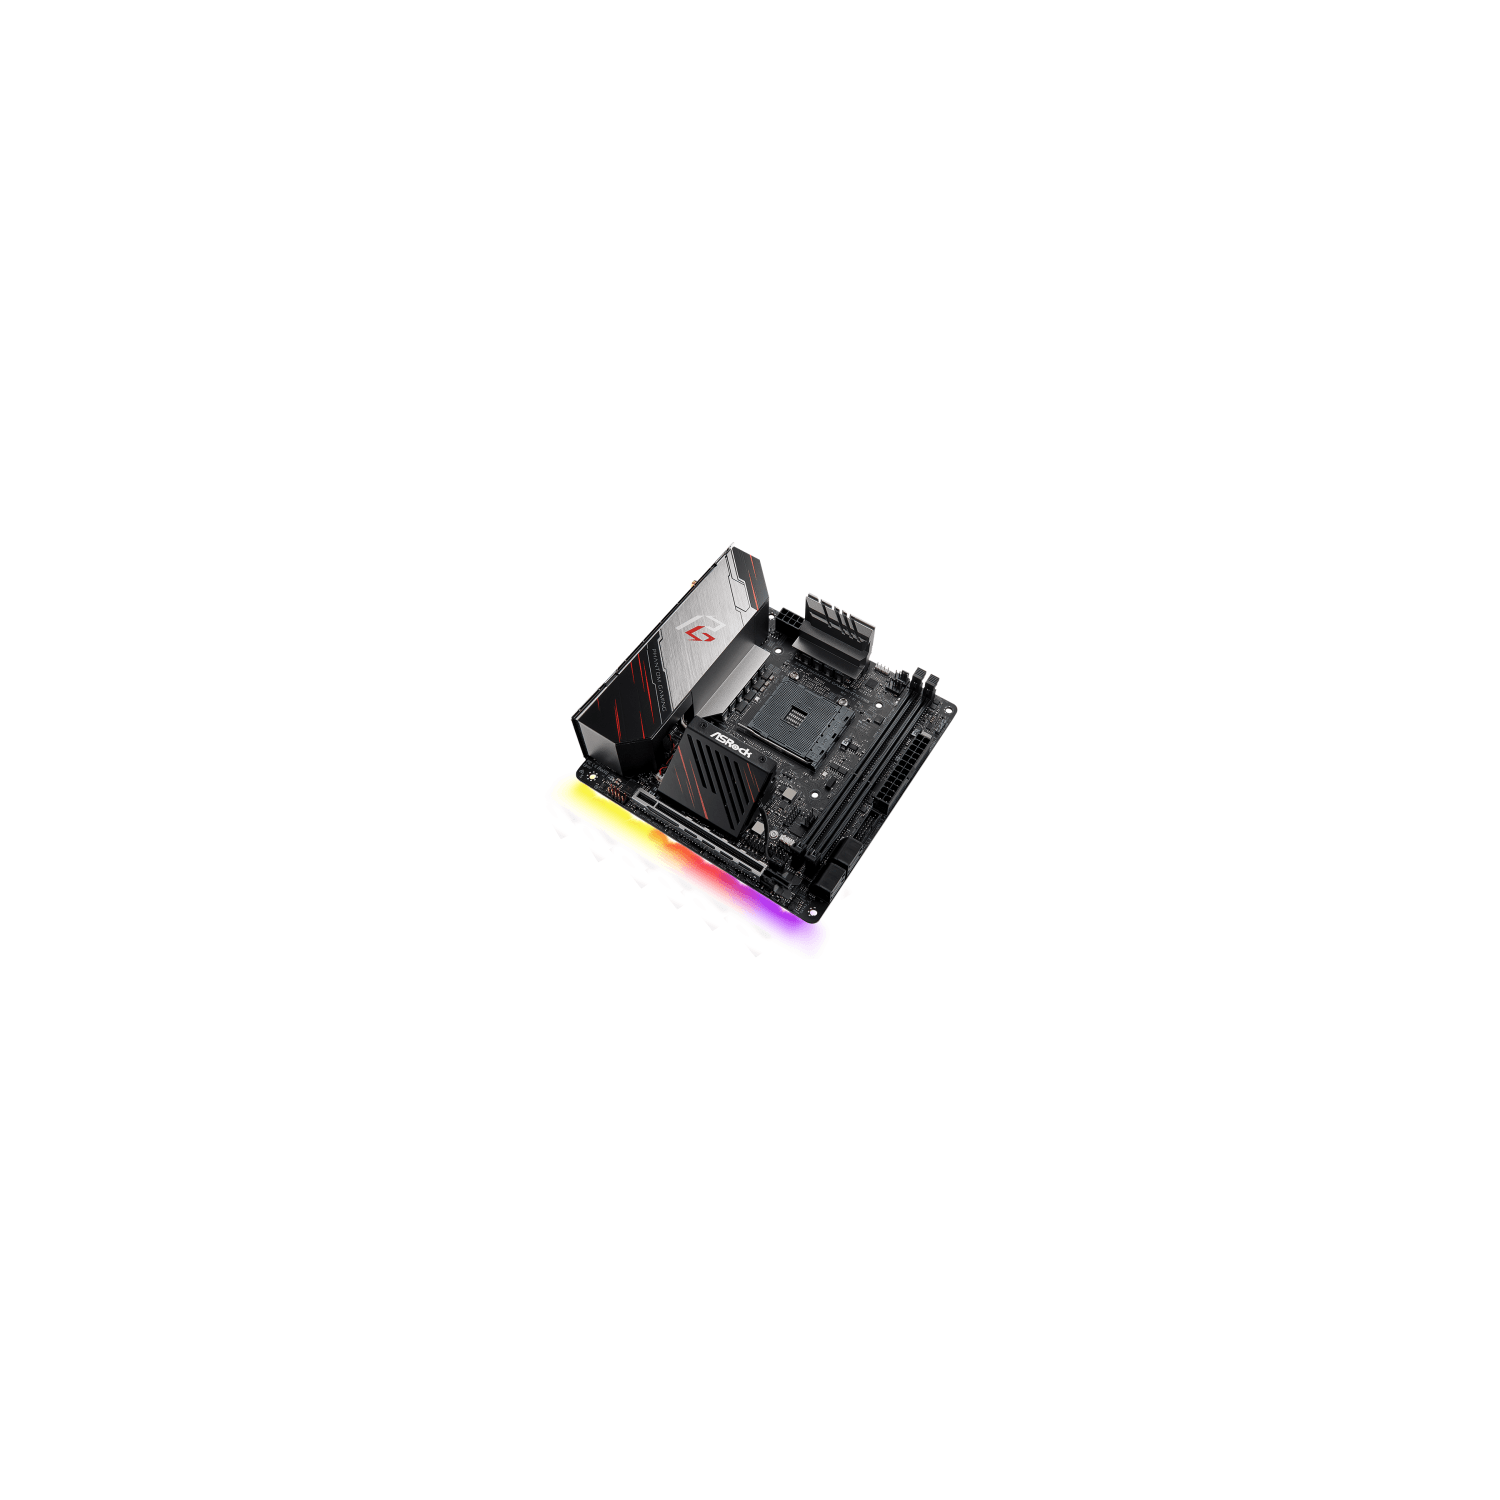 ASRock Phantom Gaming Mini ITX Thunderbolt 3 64GB DDR4 Socket AM4 2666 MHz AMD Ryzen Motherboard (X570)